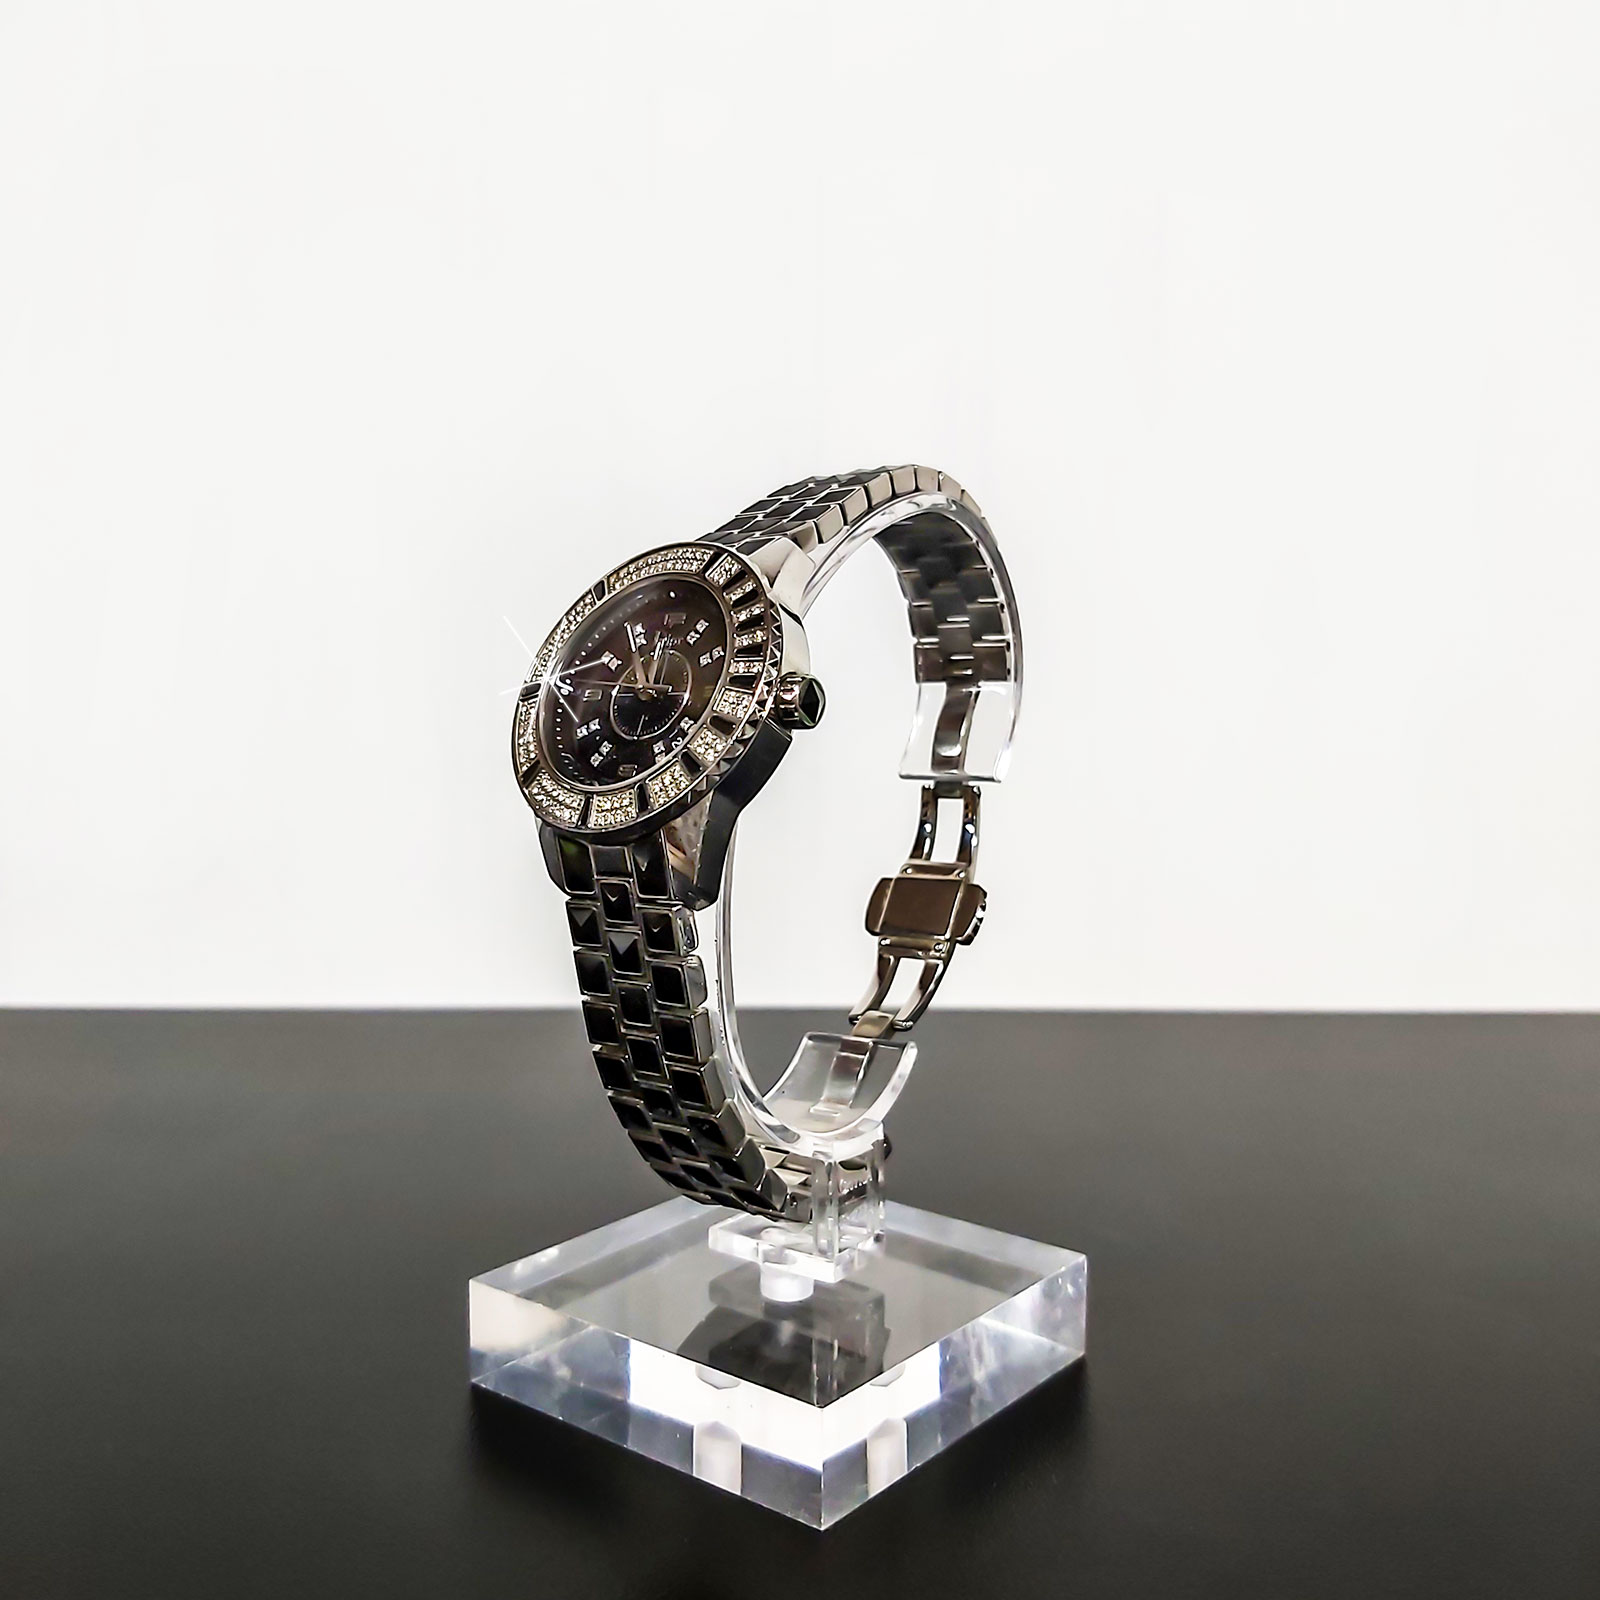 Watch Display - Solid Clear Acrylic Base - Single Watch Display (G104)